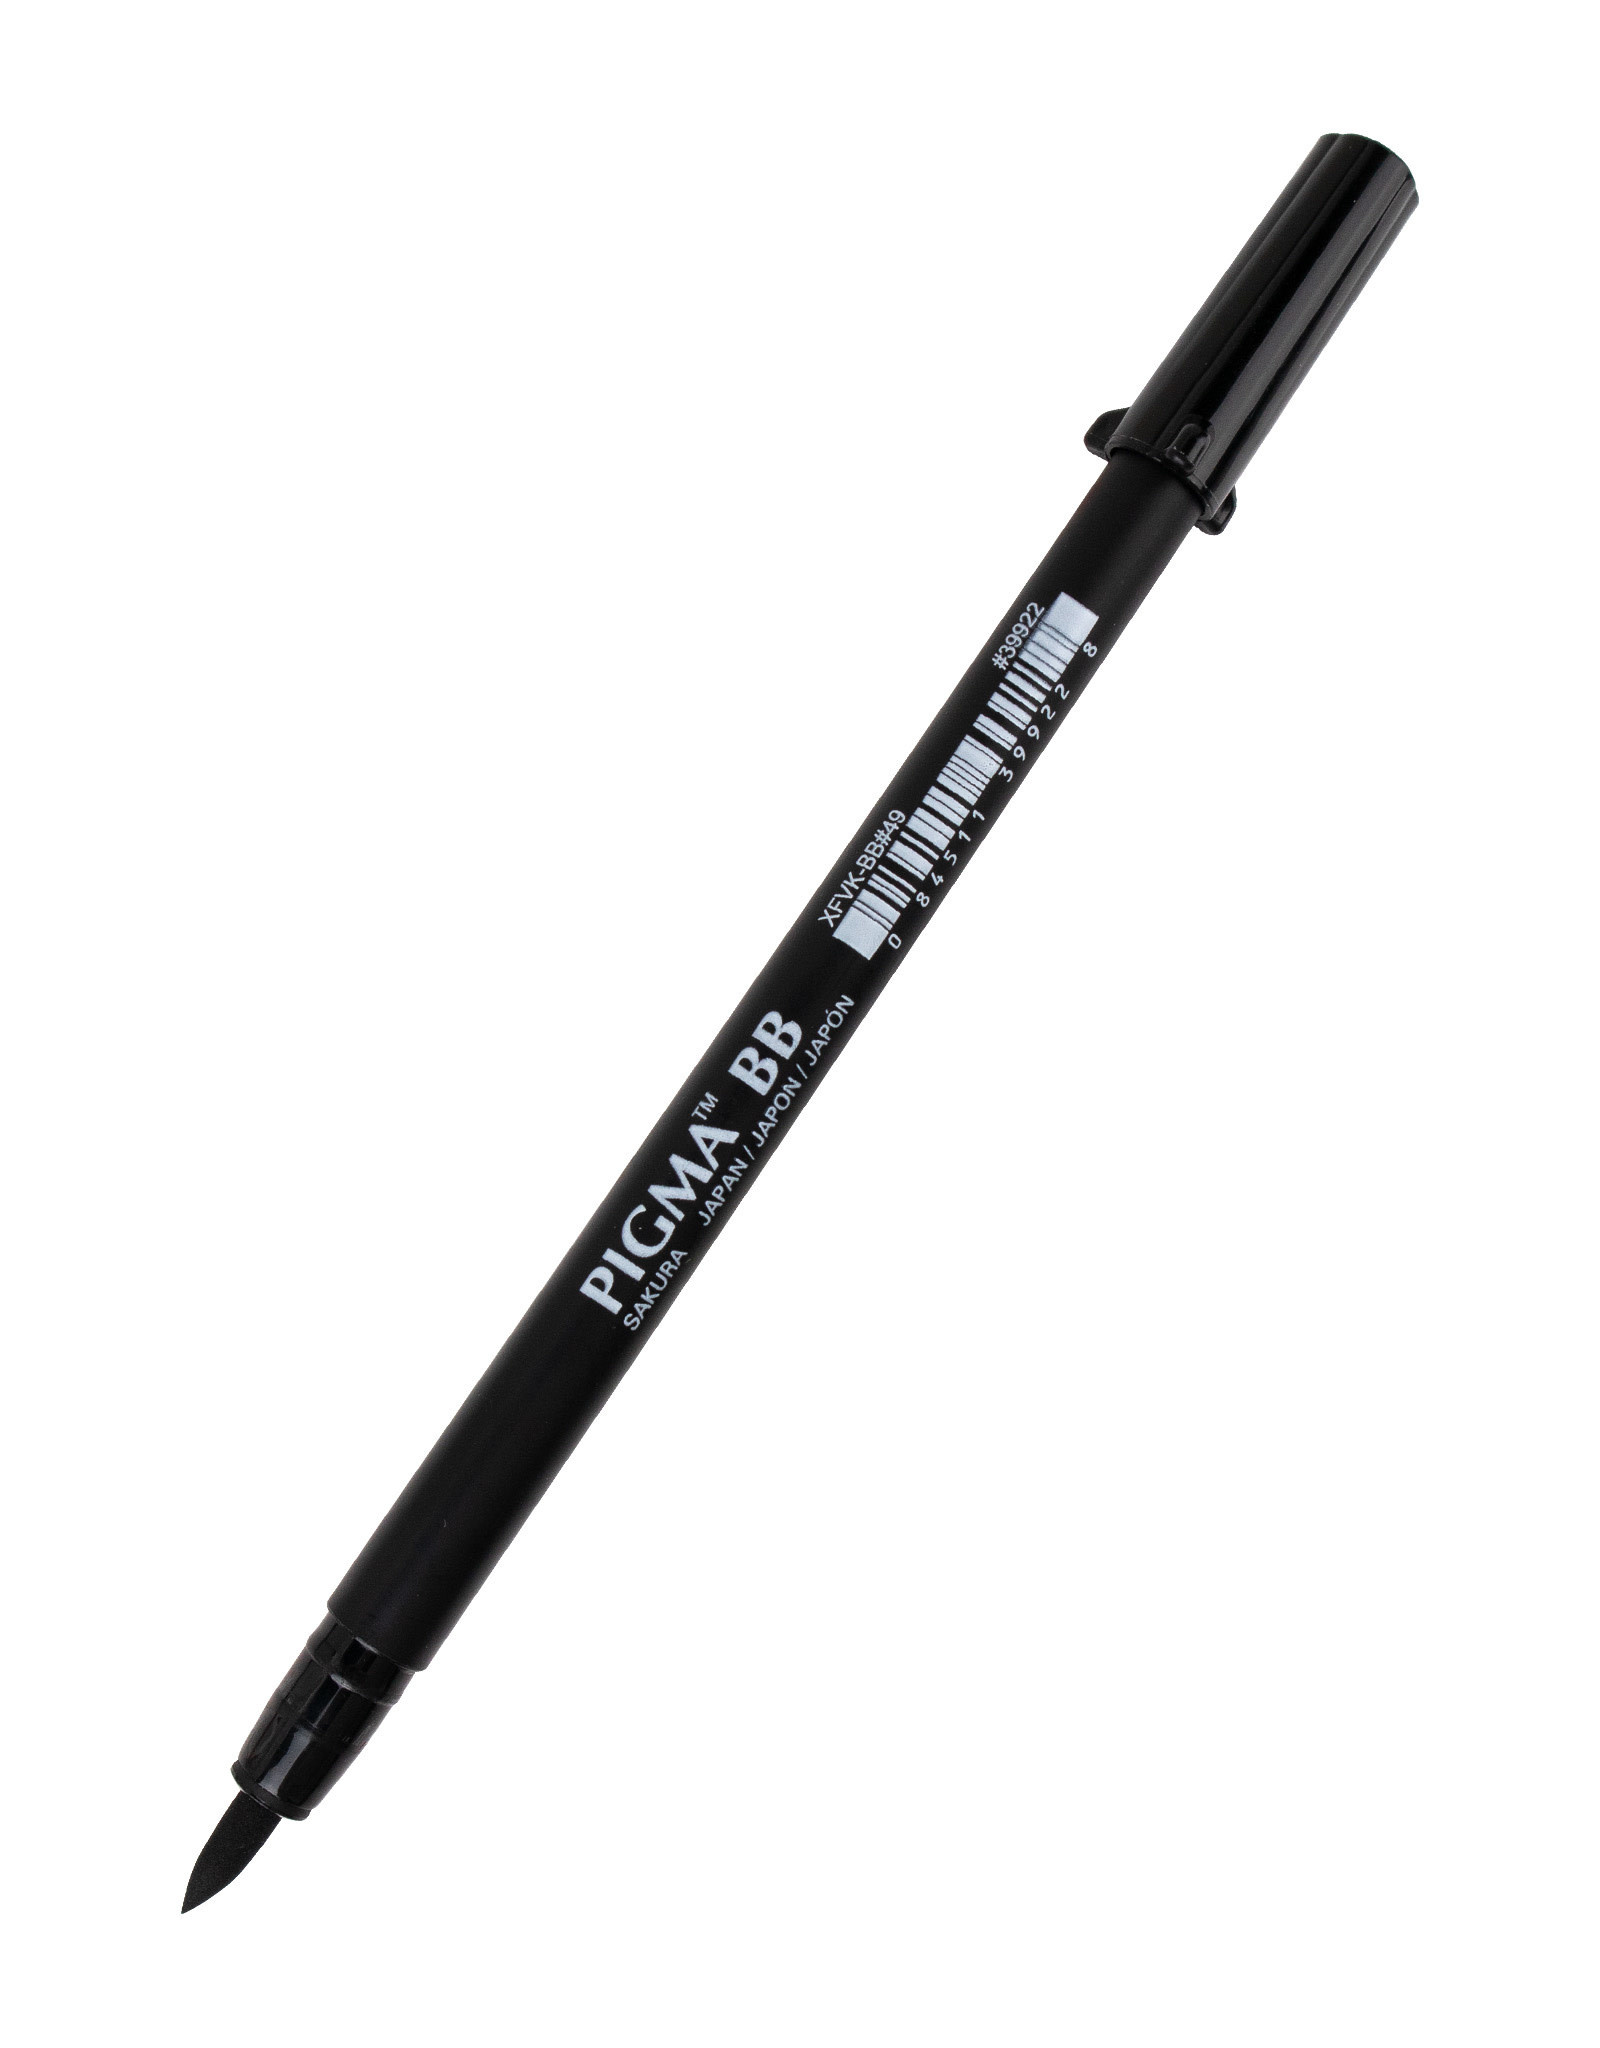 CLEARANCE Sakura Pigma Professional Brush Pen, Black (BB)